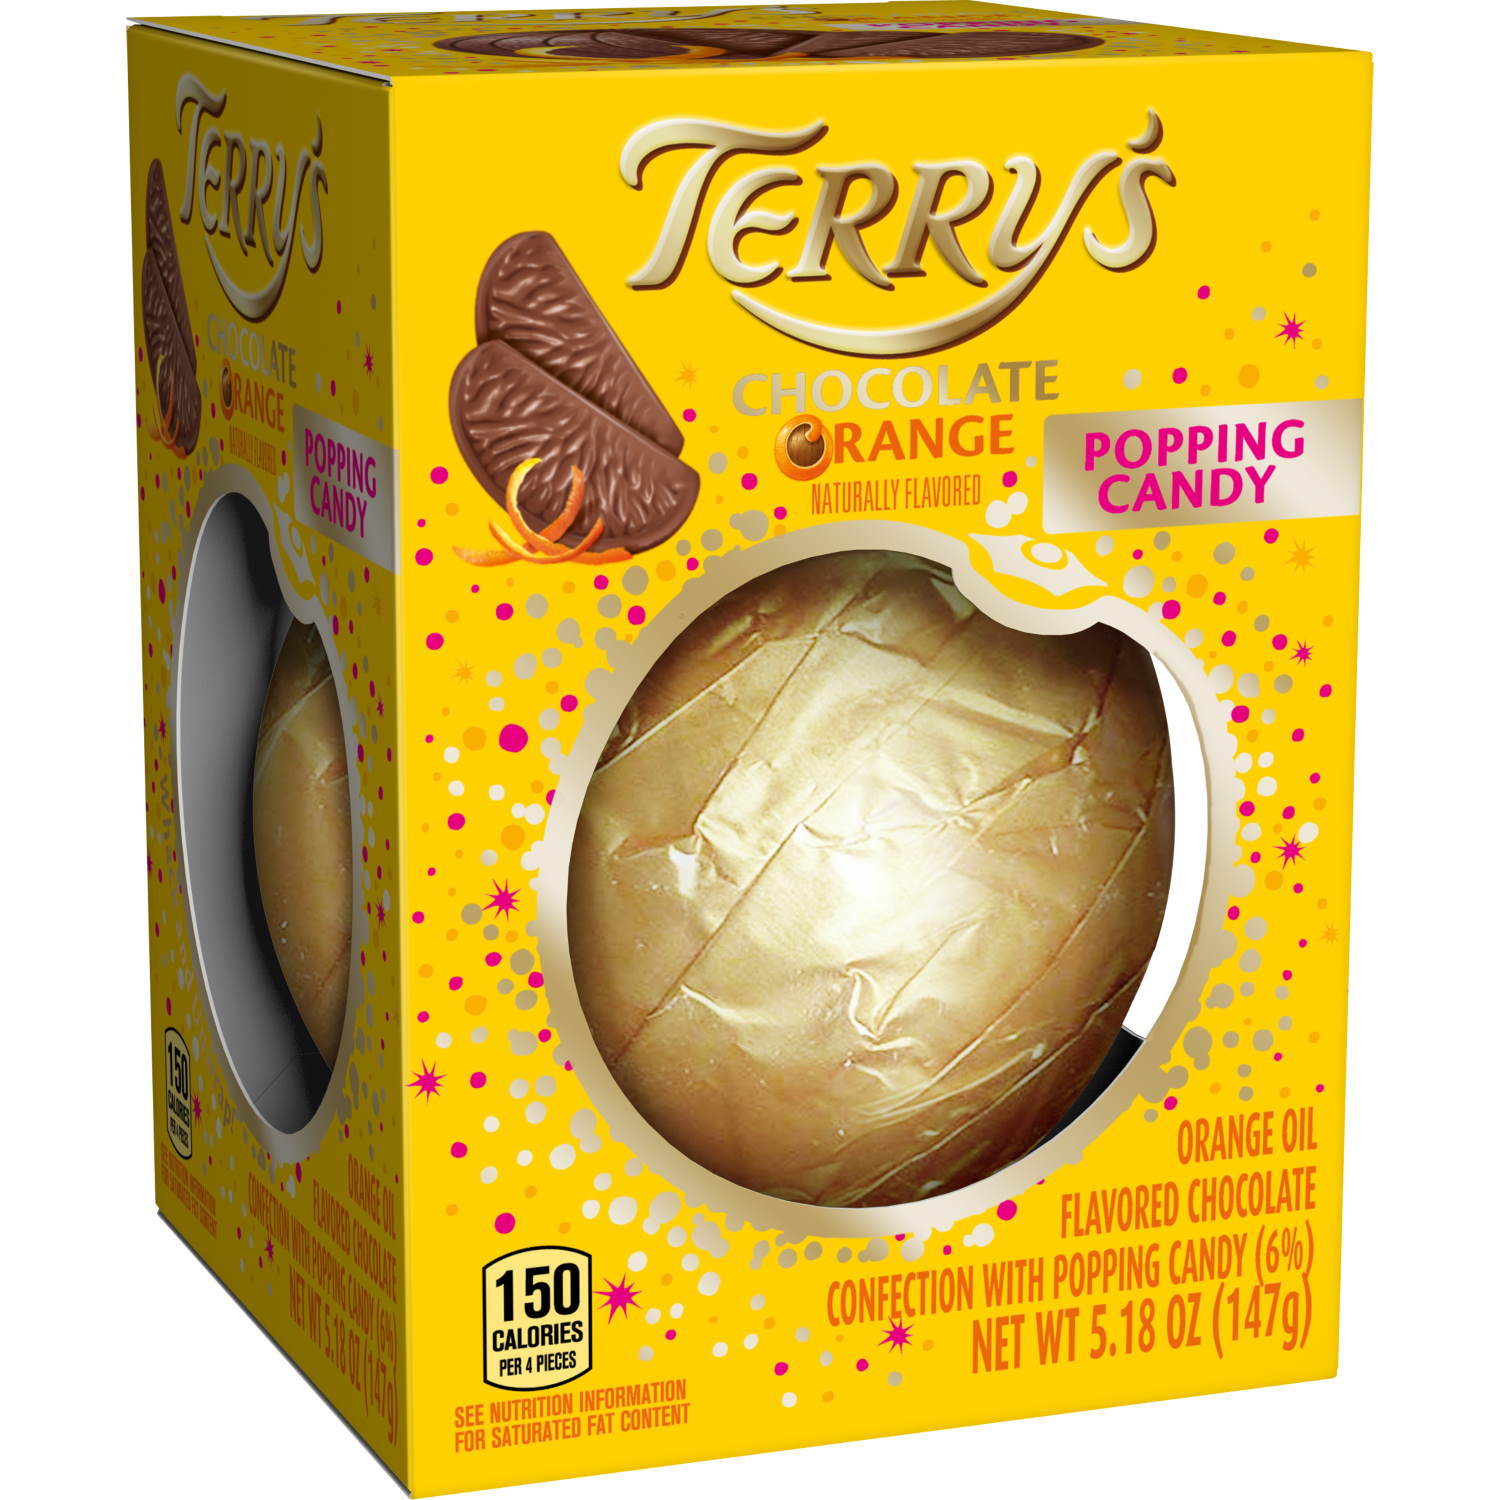 SALE 25% OFF Orig. Price Terry's Milk Chocolate Orange Ball with ...